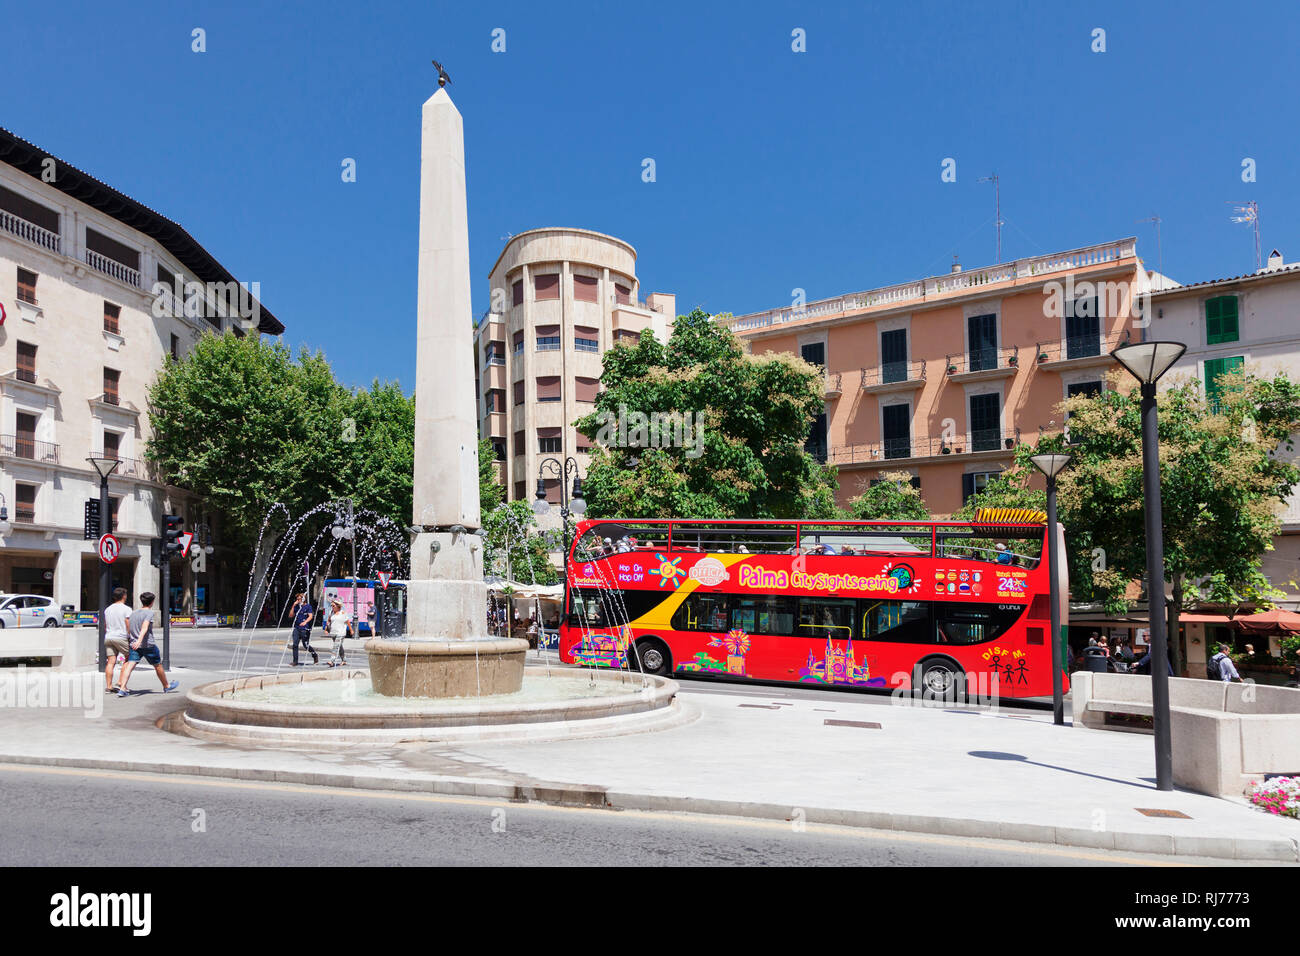 Doppeldecker Sightseeing Bus an der Placa Rei Joan Carles I, Palma de Mallorca, Mallorca, Balearen, Spanien Foto Stock